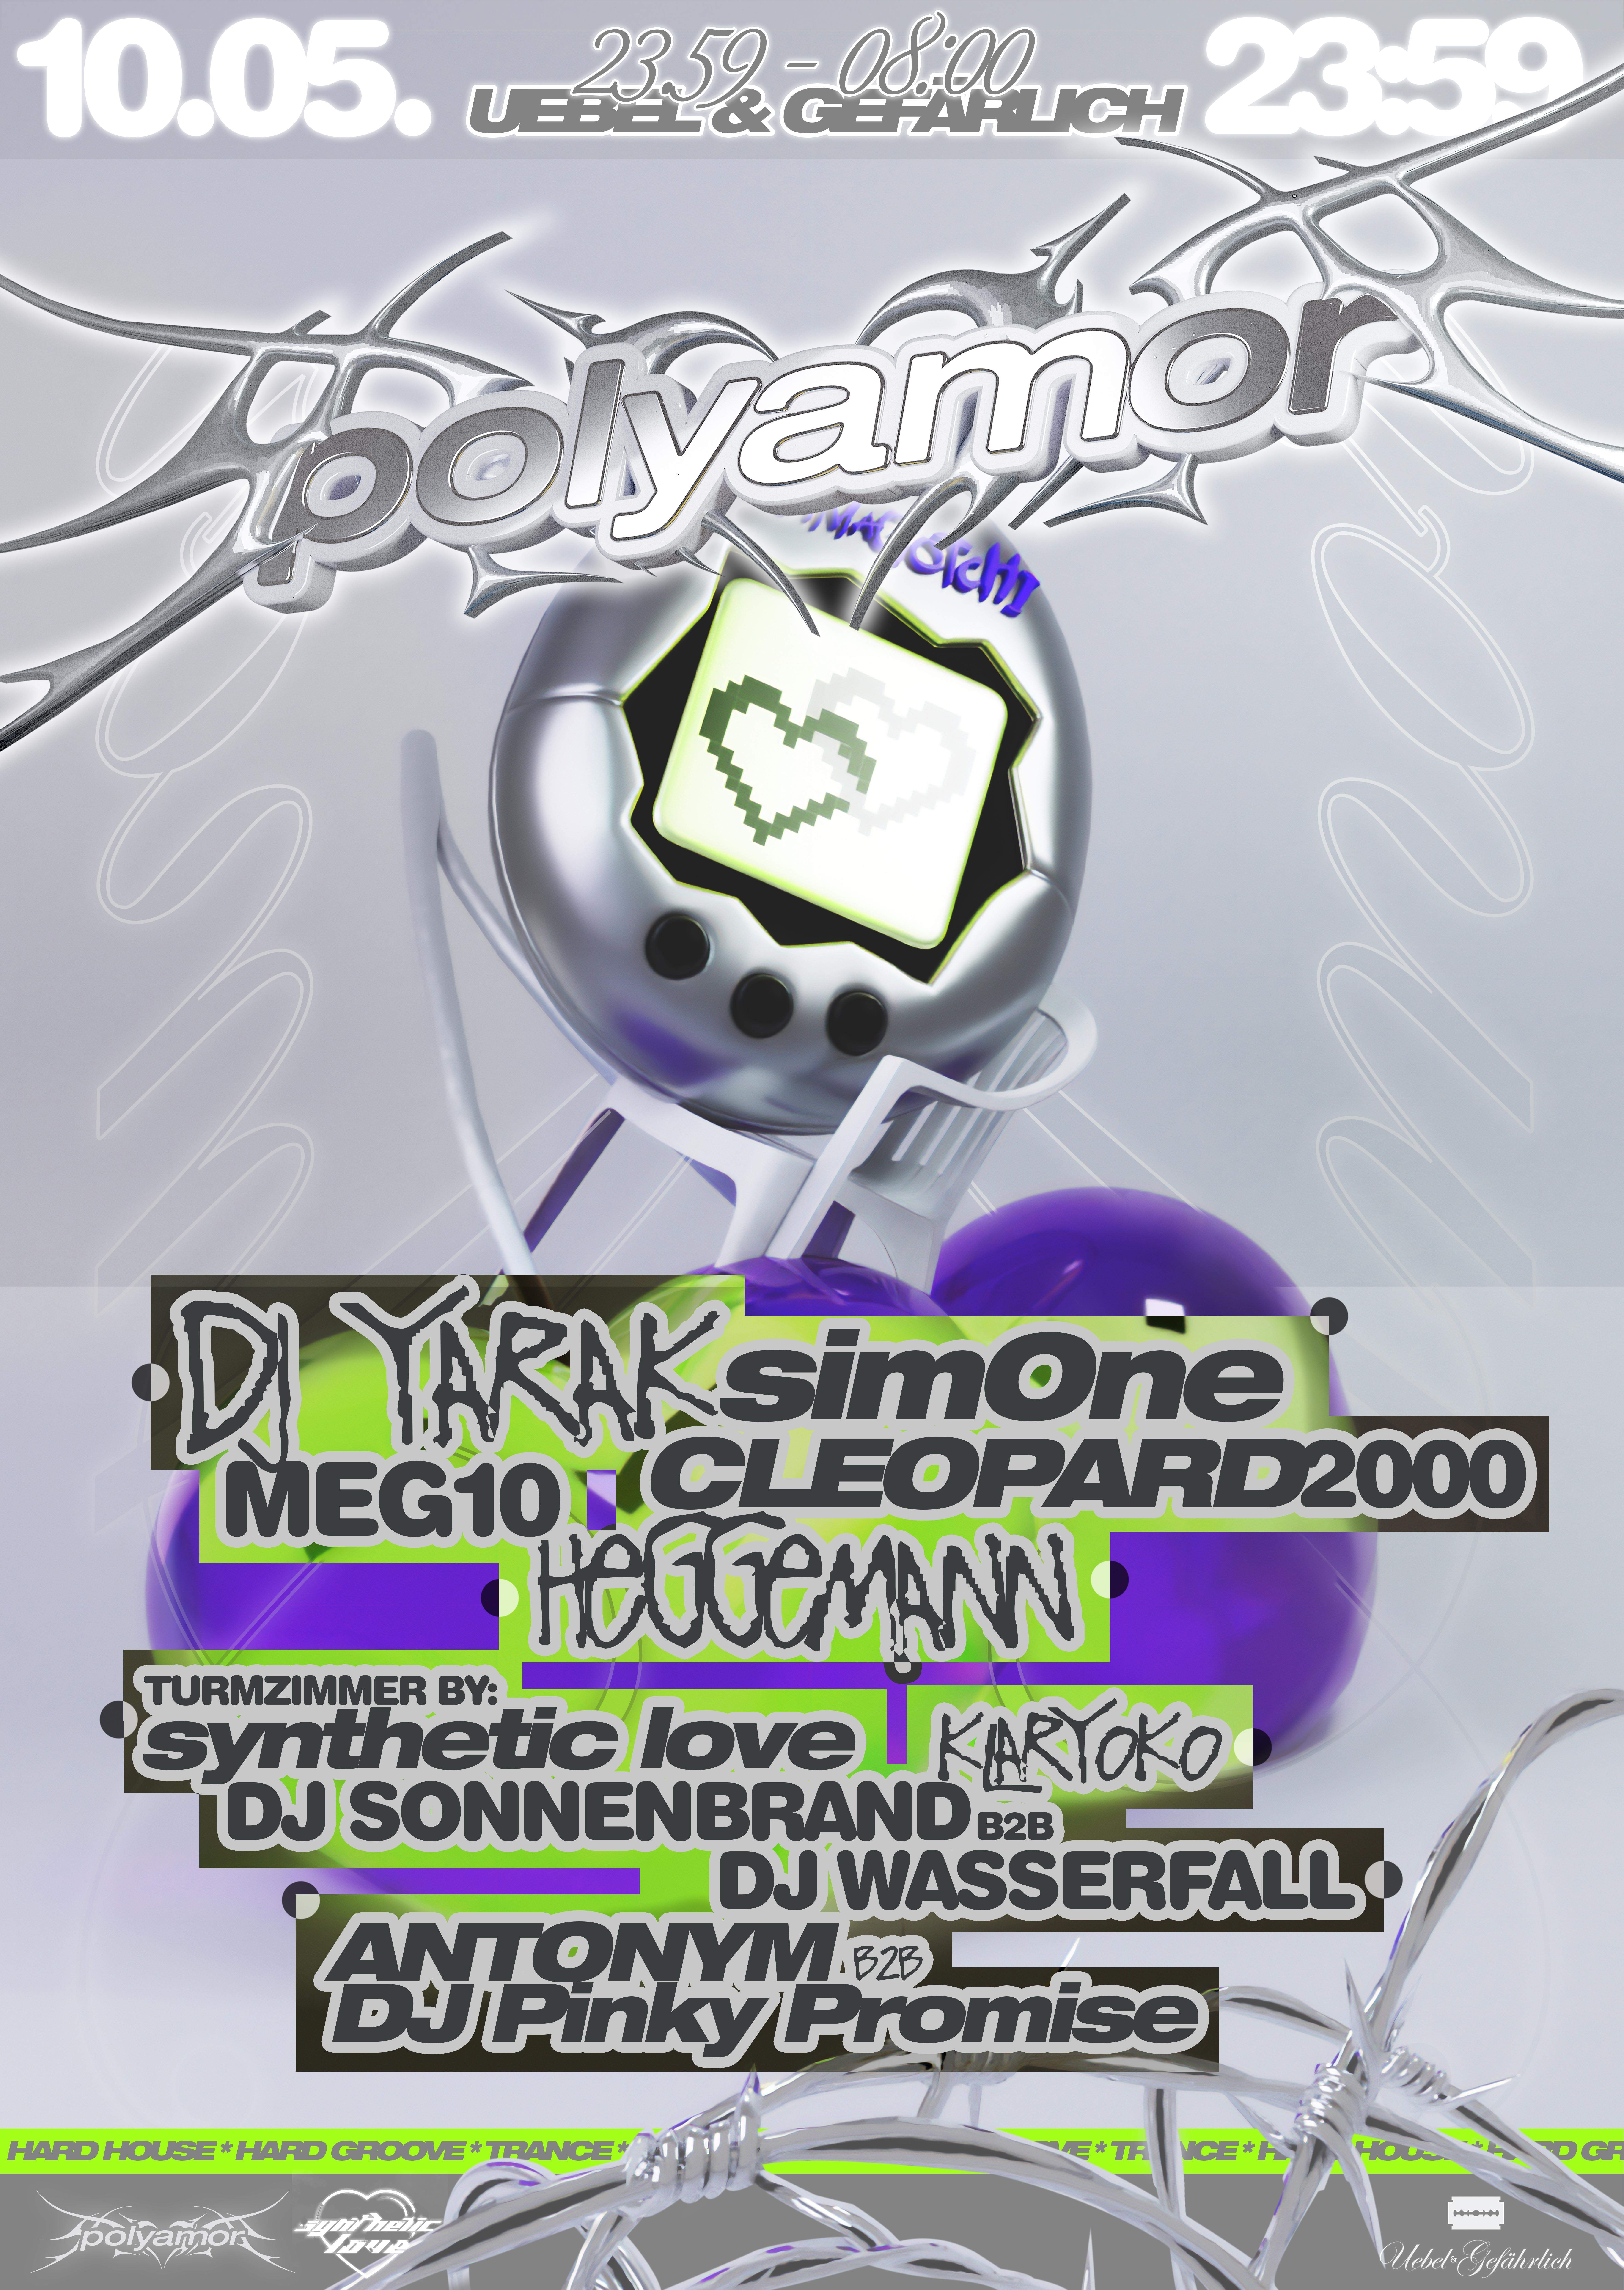 Polyamor pres. sim0ne, DJ YARAK, Cleopard2000, Heggemann, Meg10, DJ Sonnenbrand  - Página frontal